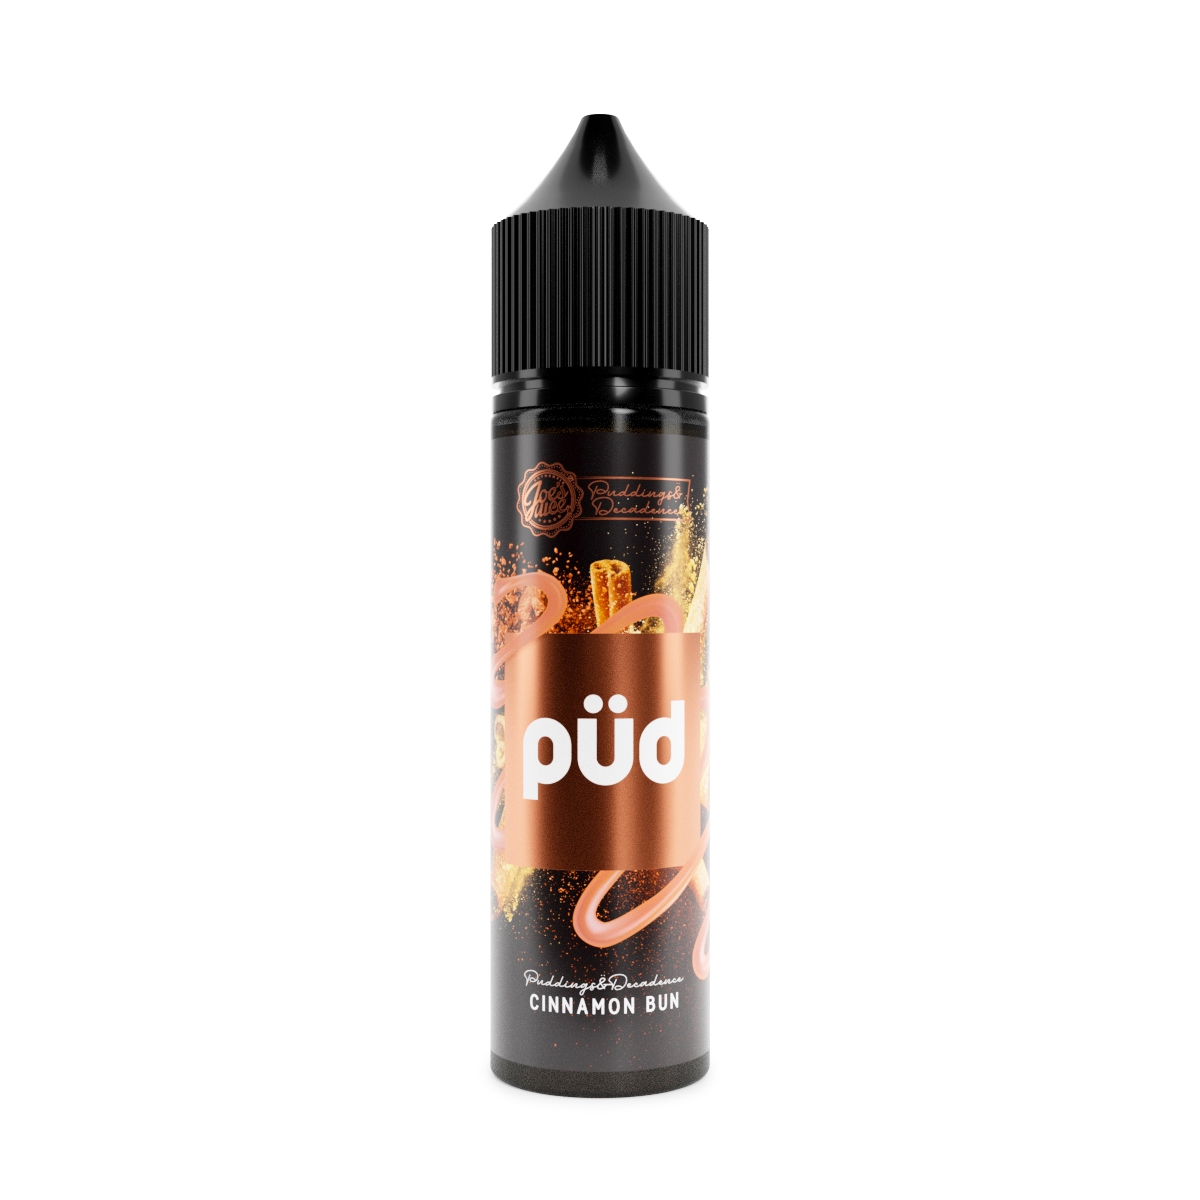 PUD - Cinnamon Bun Flavour Concentrate by Joe's Juice